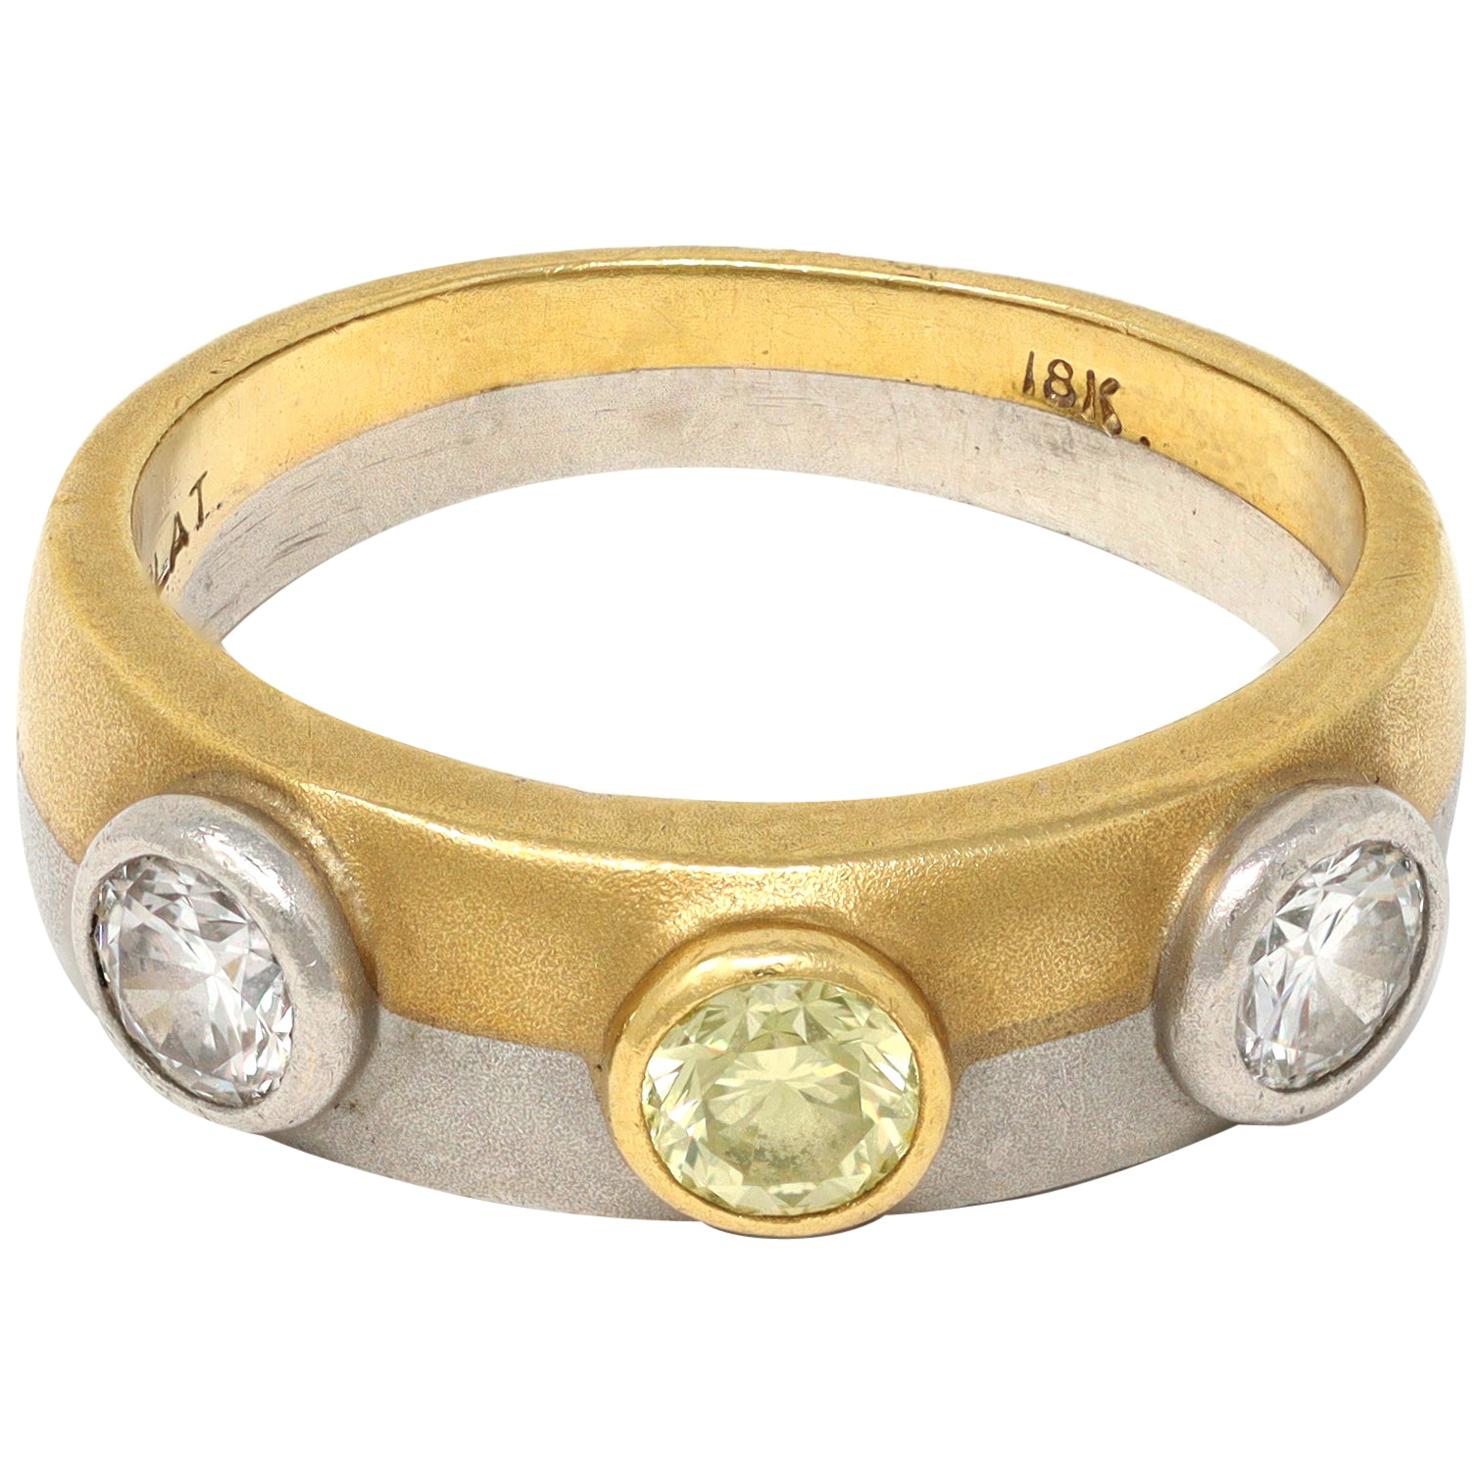 Fused Platinum and 18k Gold Three-Stone Diamond Band Ring